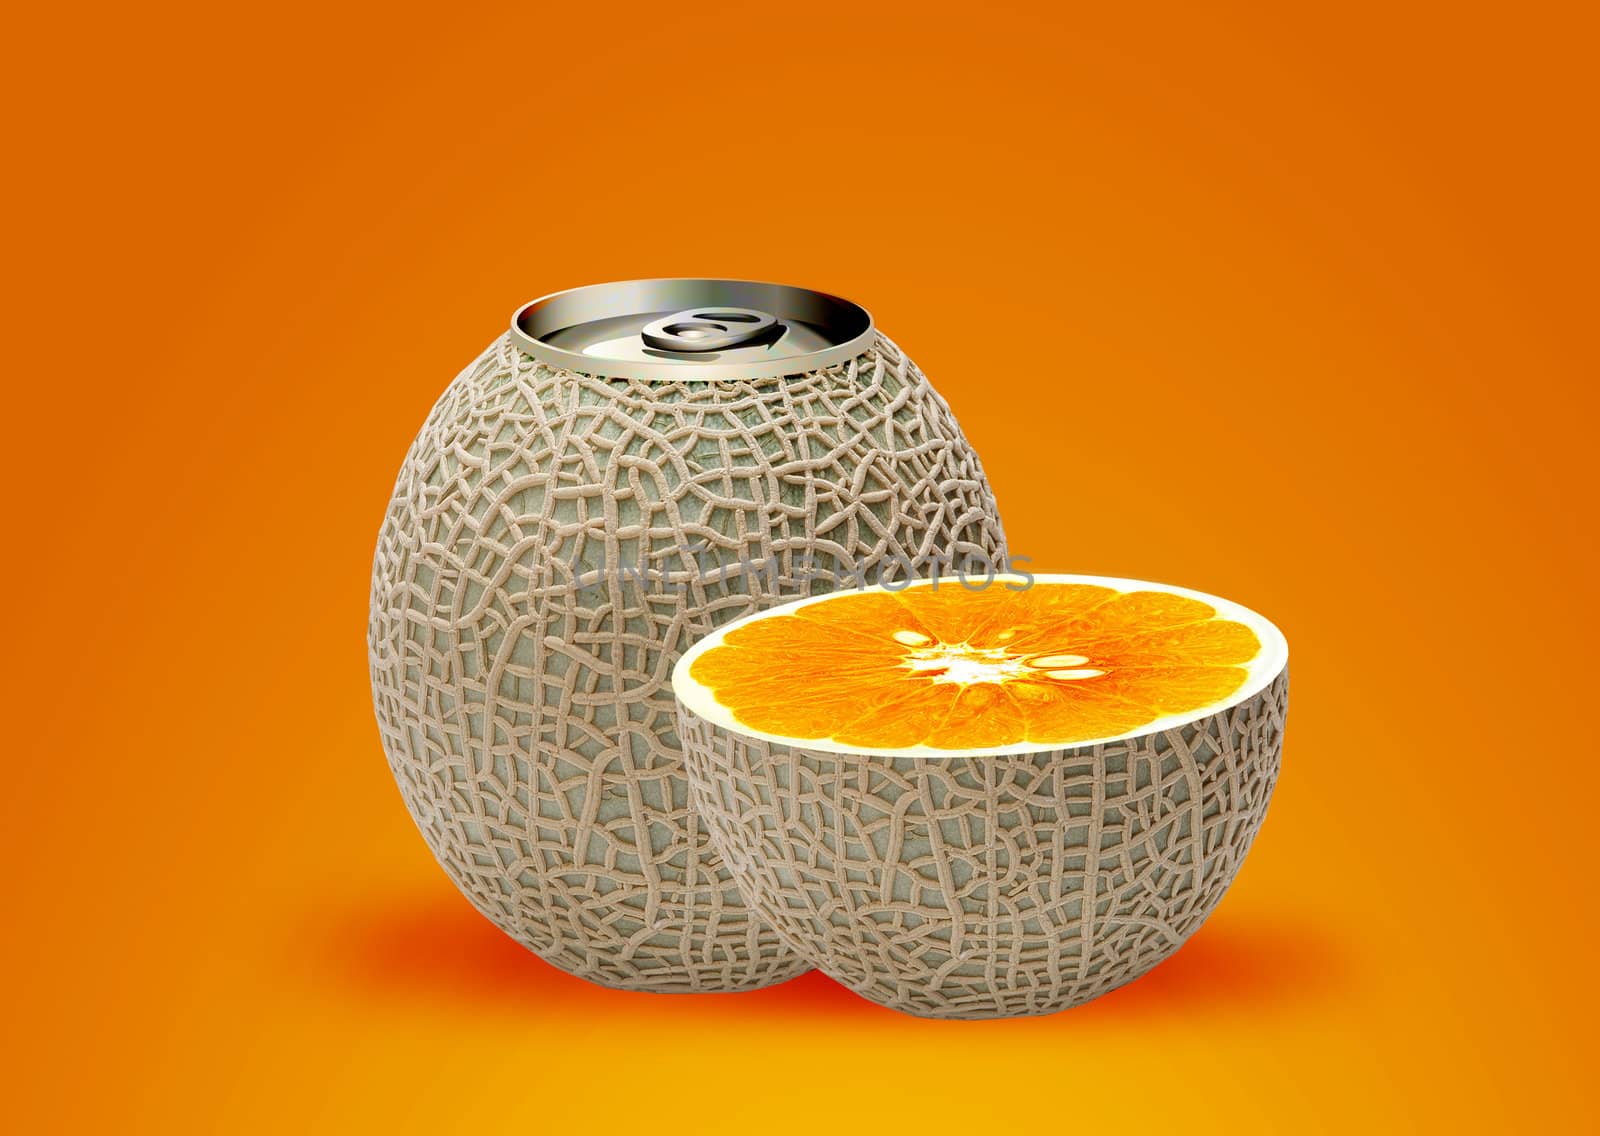 melon can and half orange, ideal for orange juice.